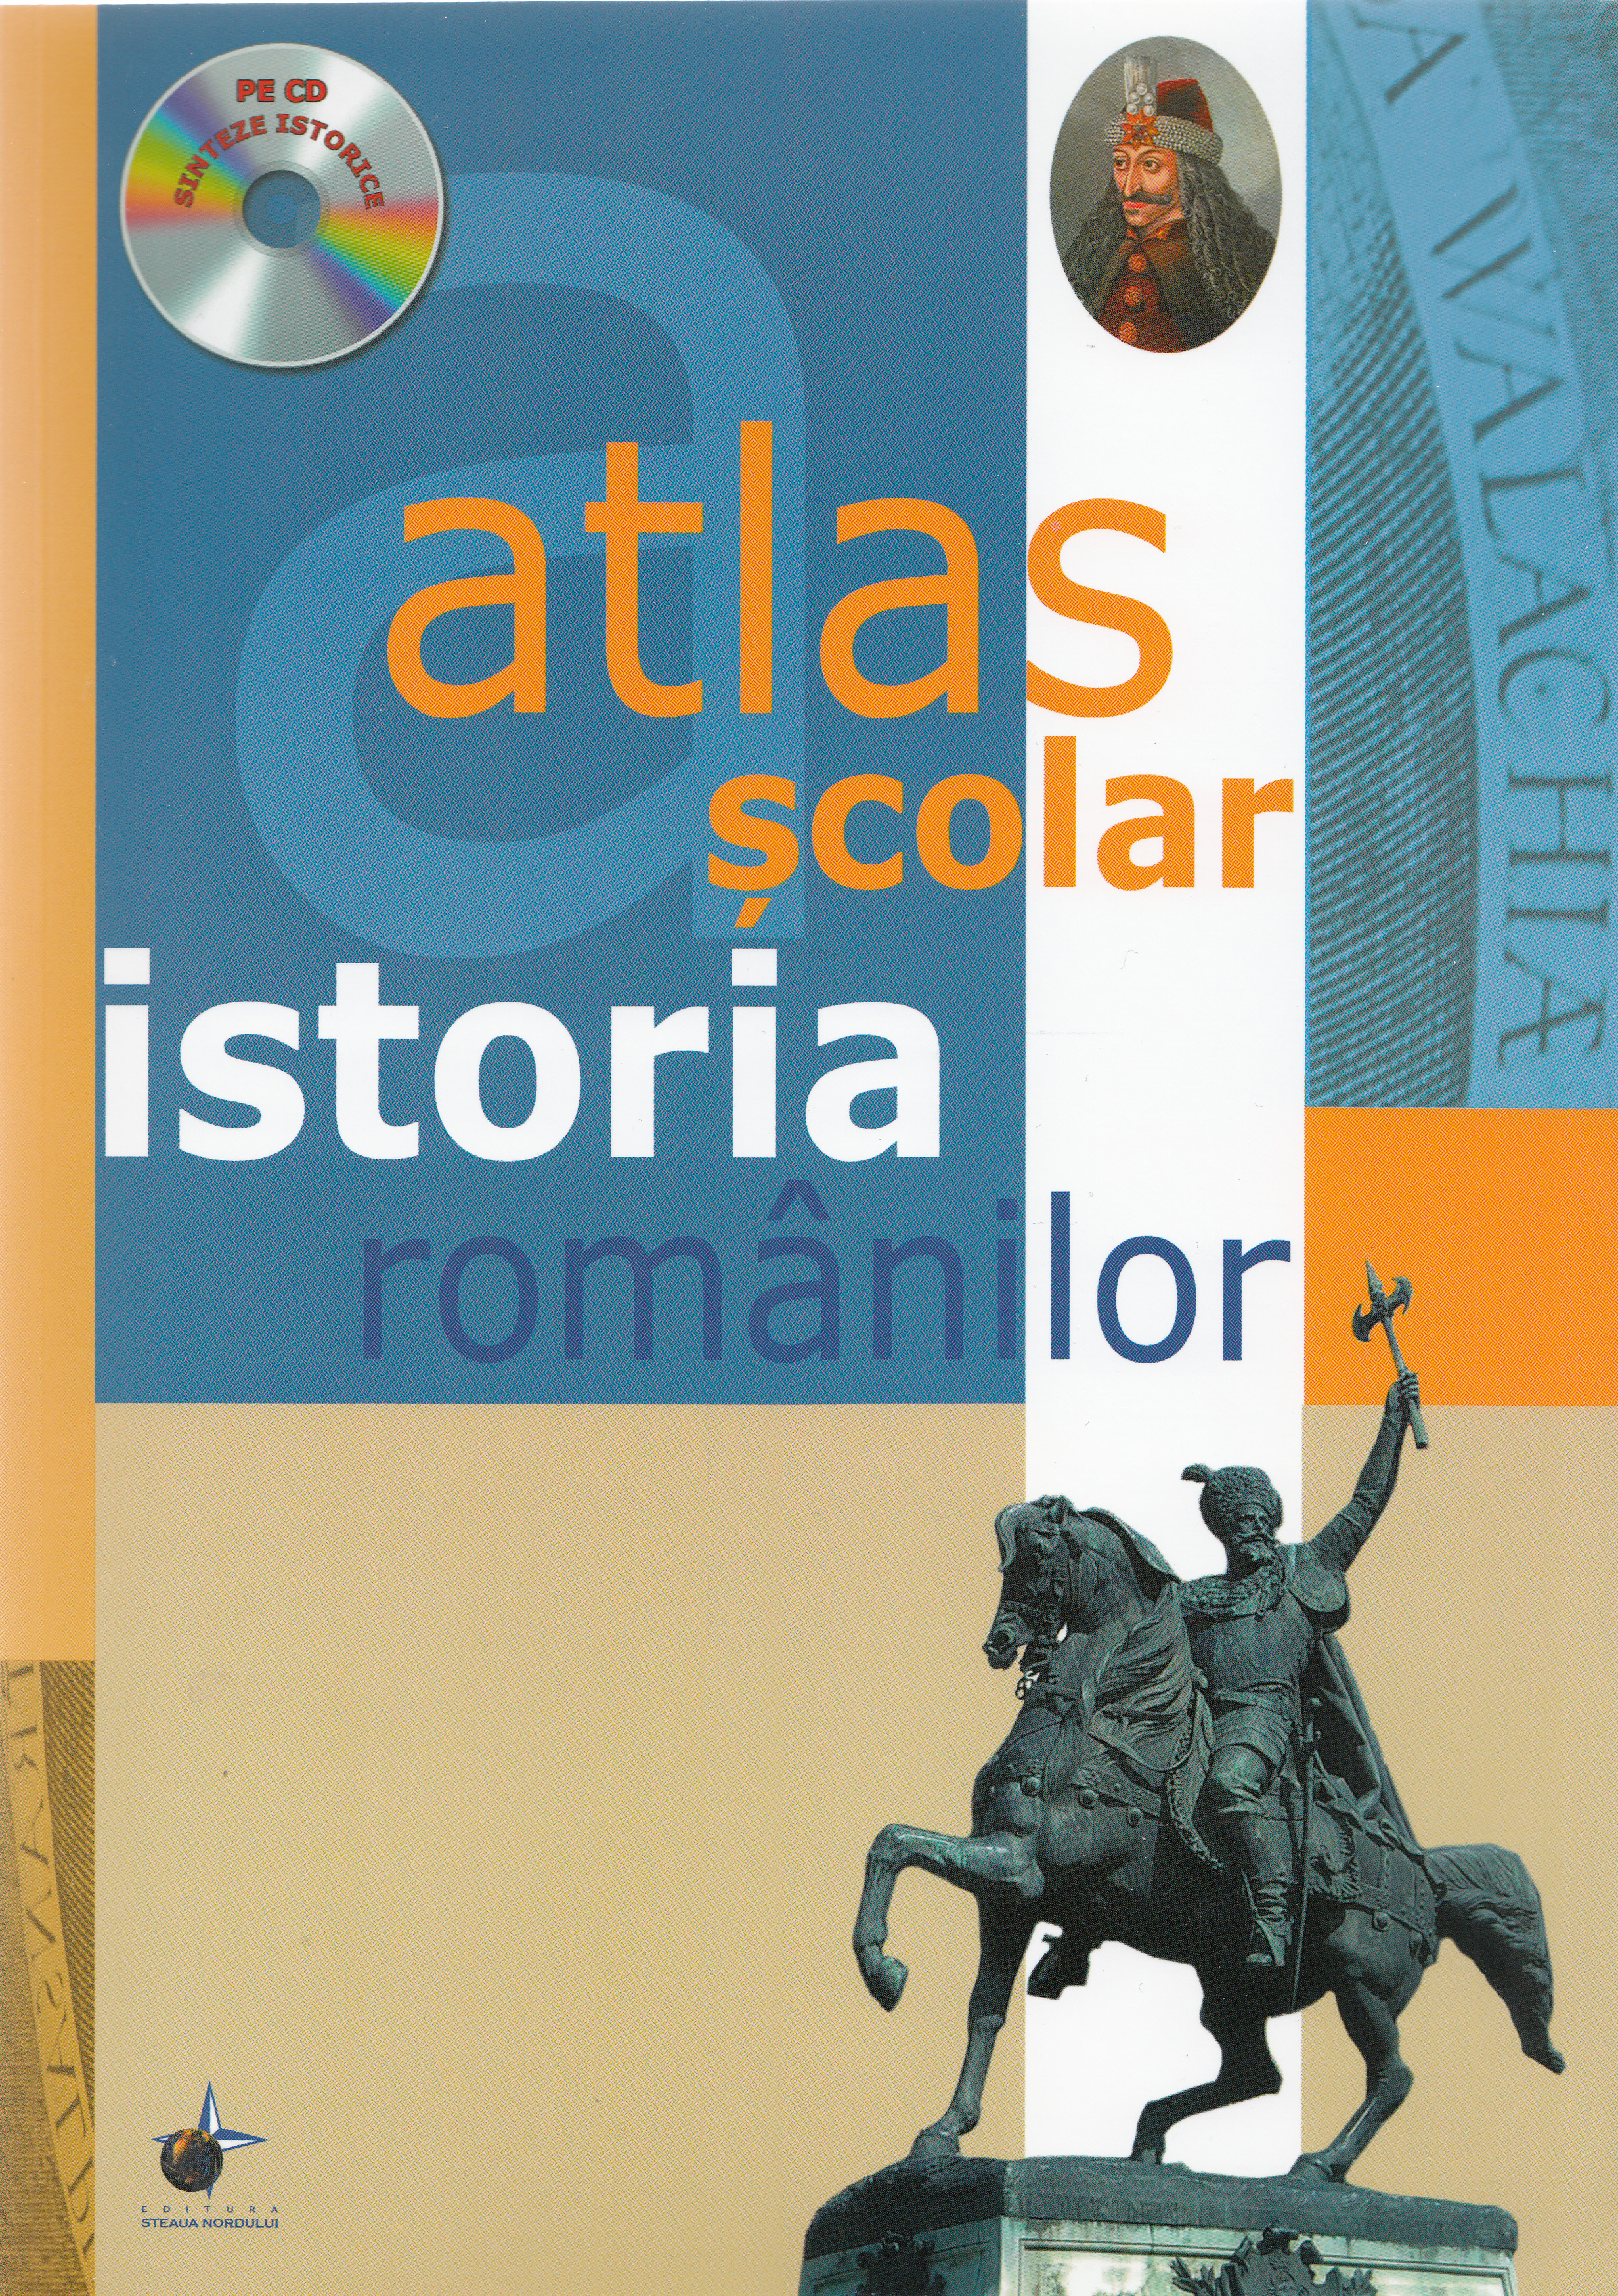 Atlas scolar. Istoria romanilor + CD